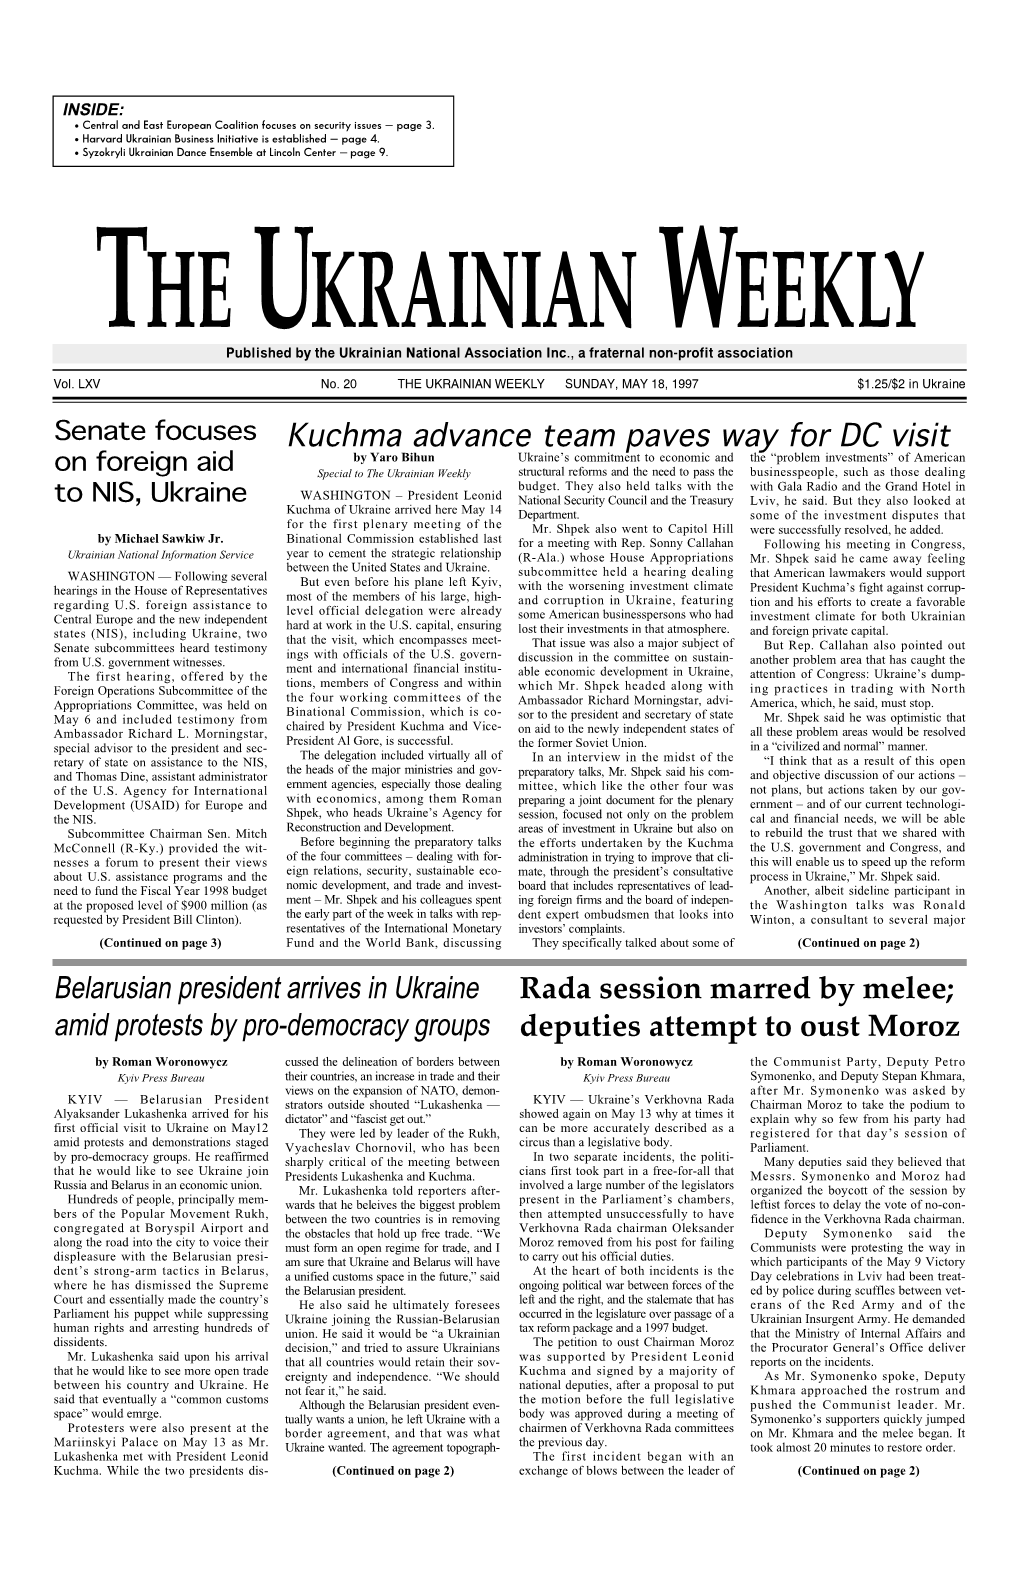 The Ukrainian Weekly 1997, No.20